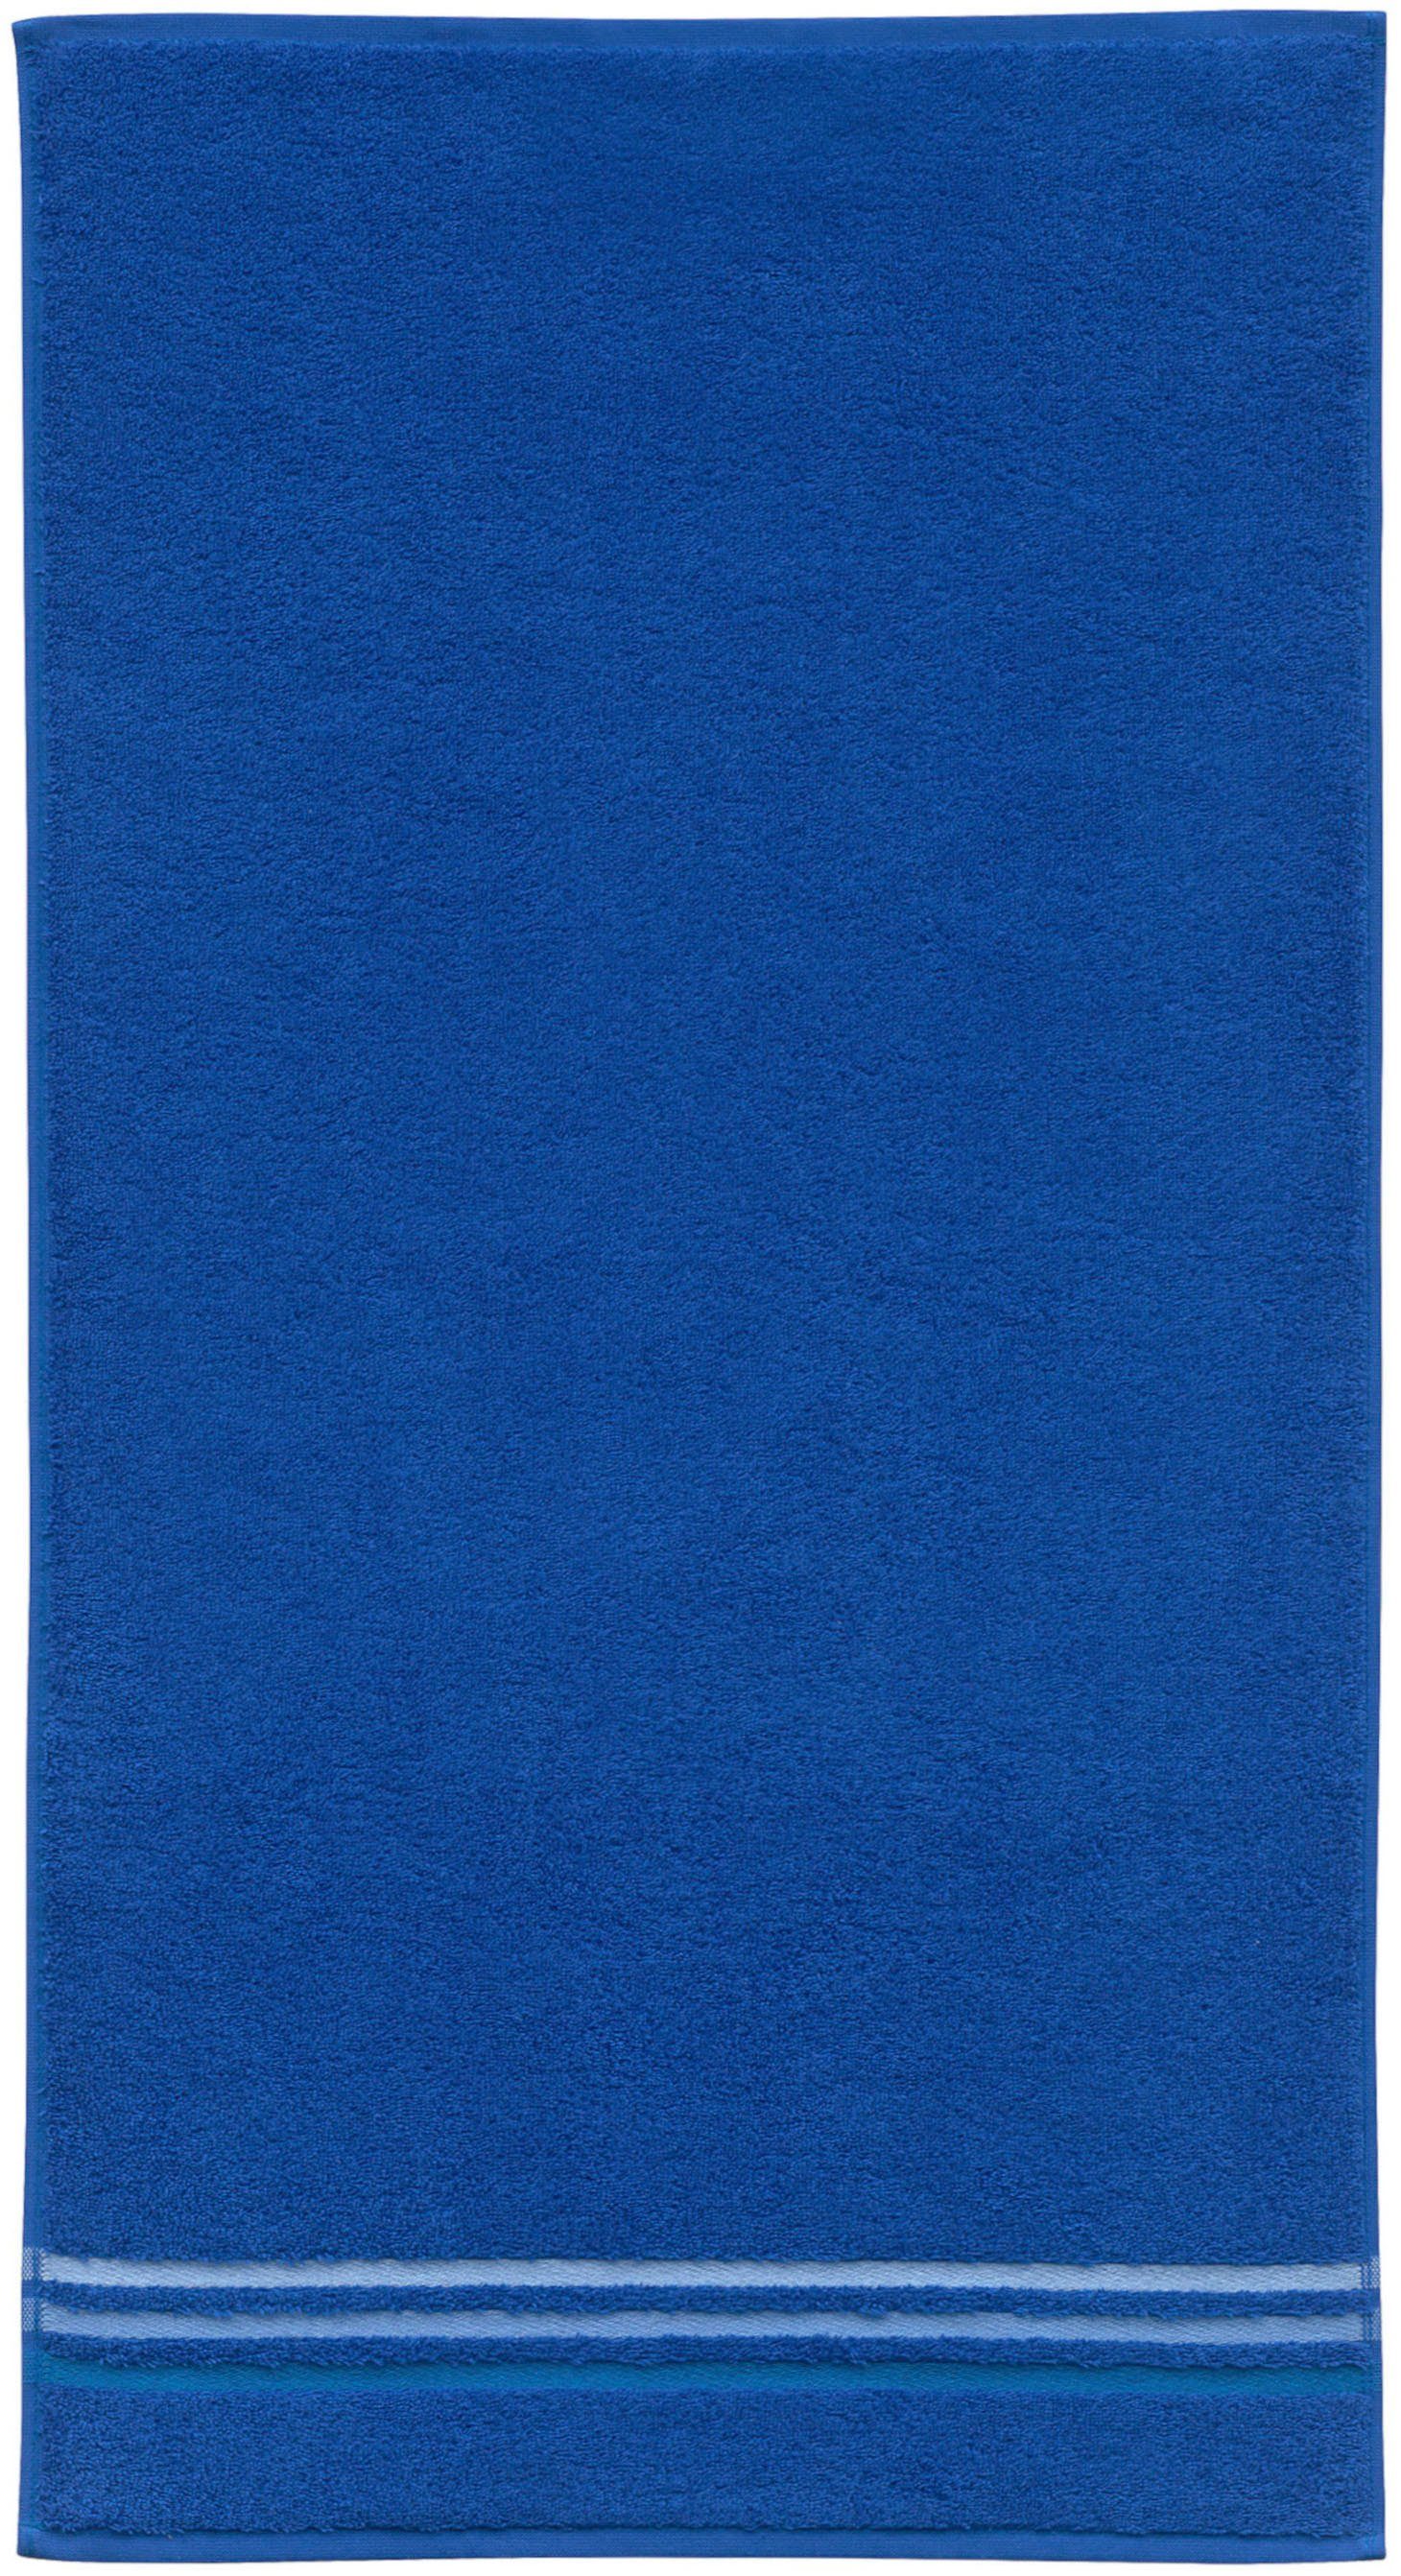 5er Frottier OEKO-TEX®-zertifiziert Skyline Gästehandtücher (5-St), IN Color royalblau Schiesser by Set, im GREEN MADE